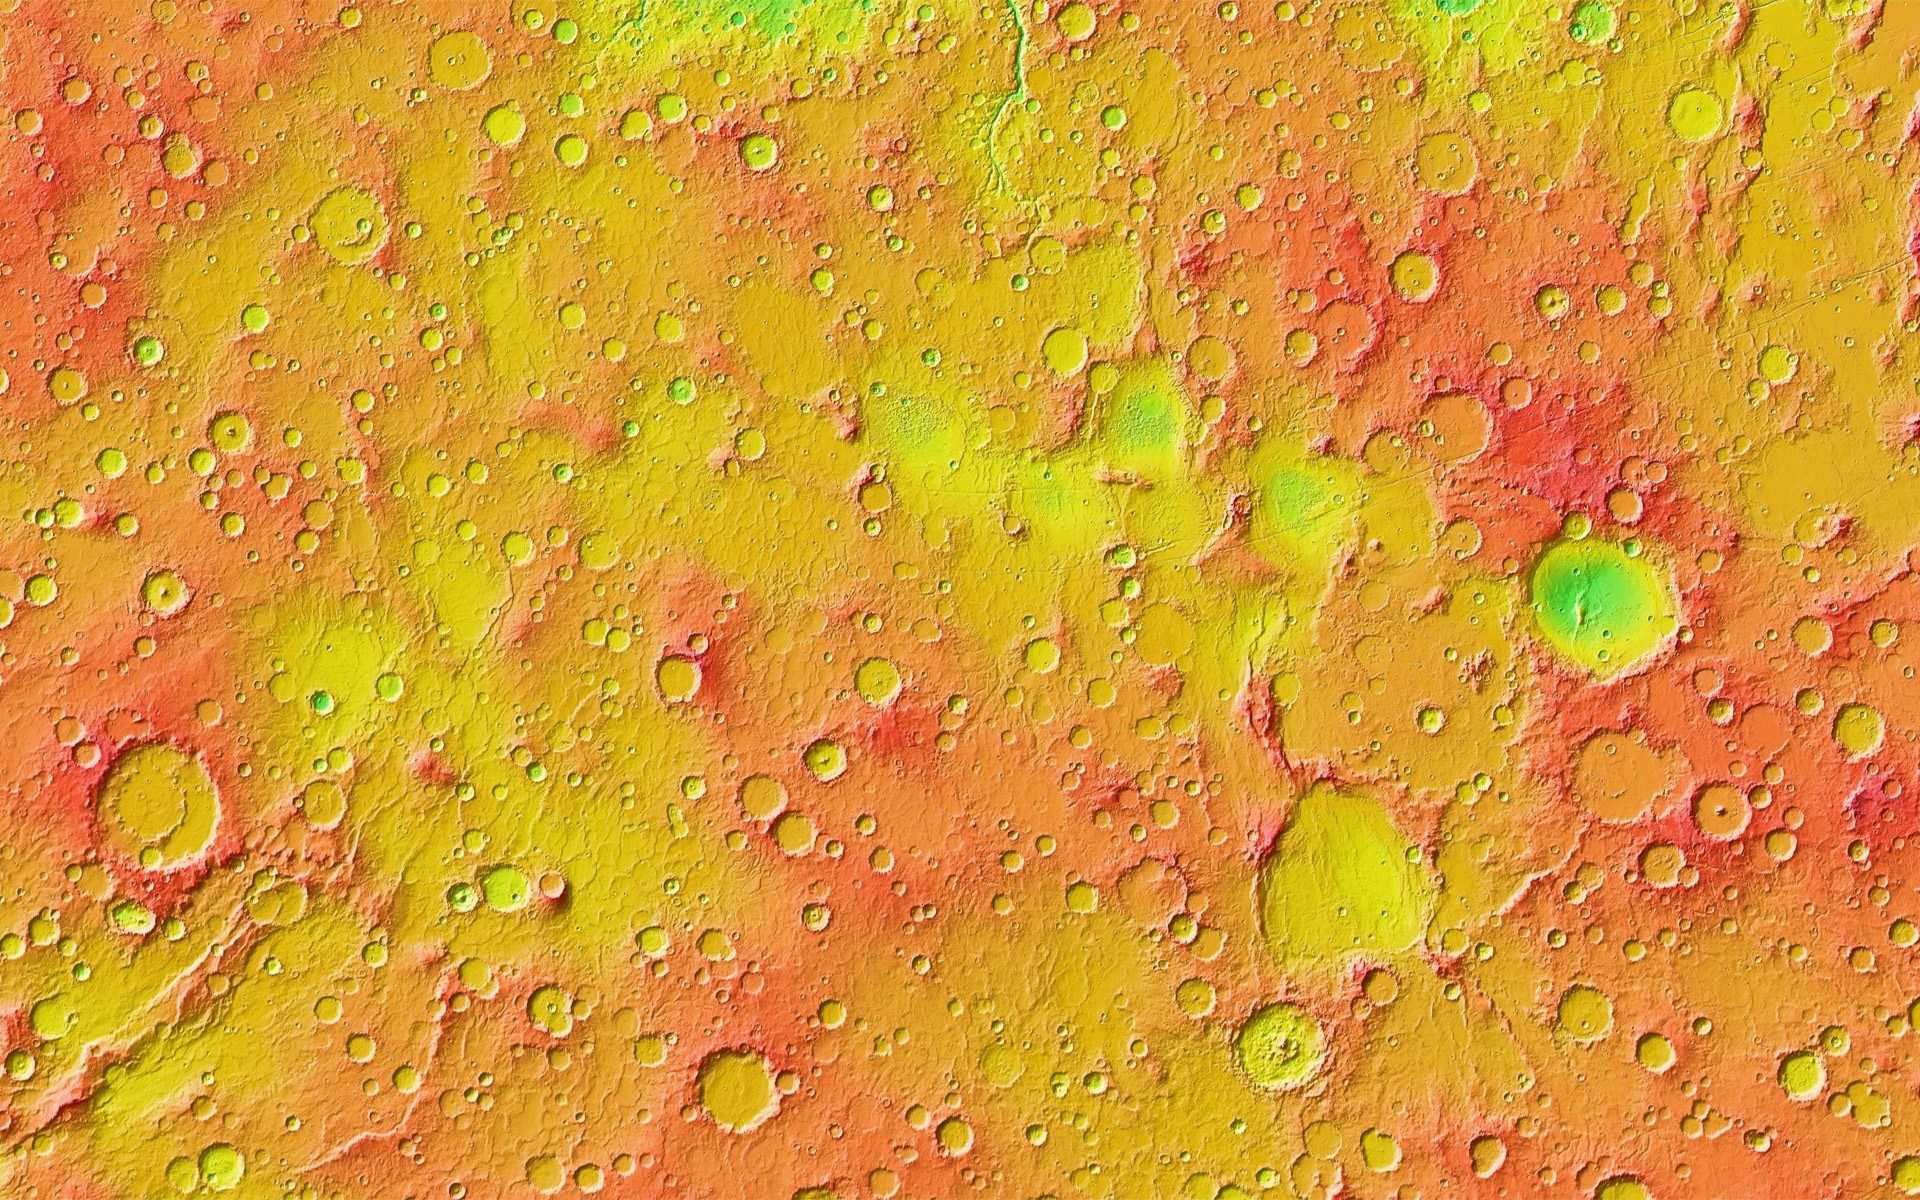 outer space, Mars - desktop wallpaper